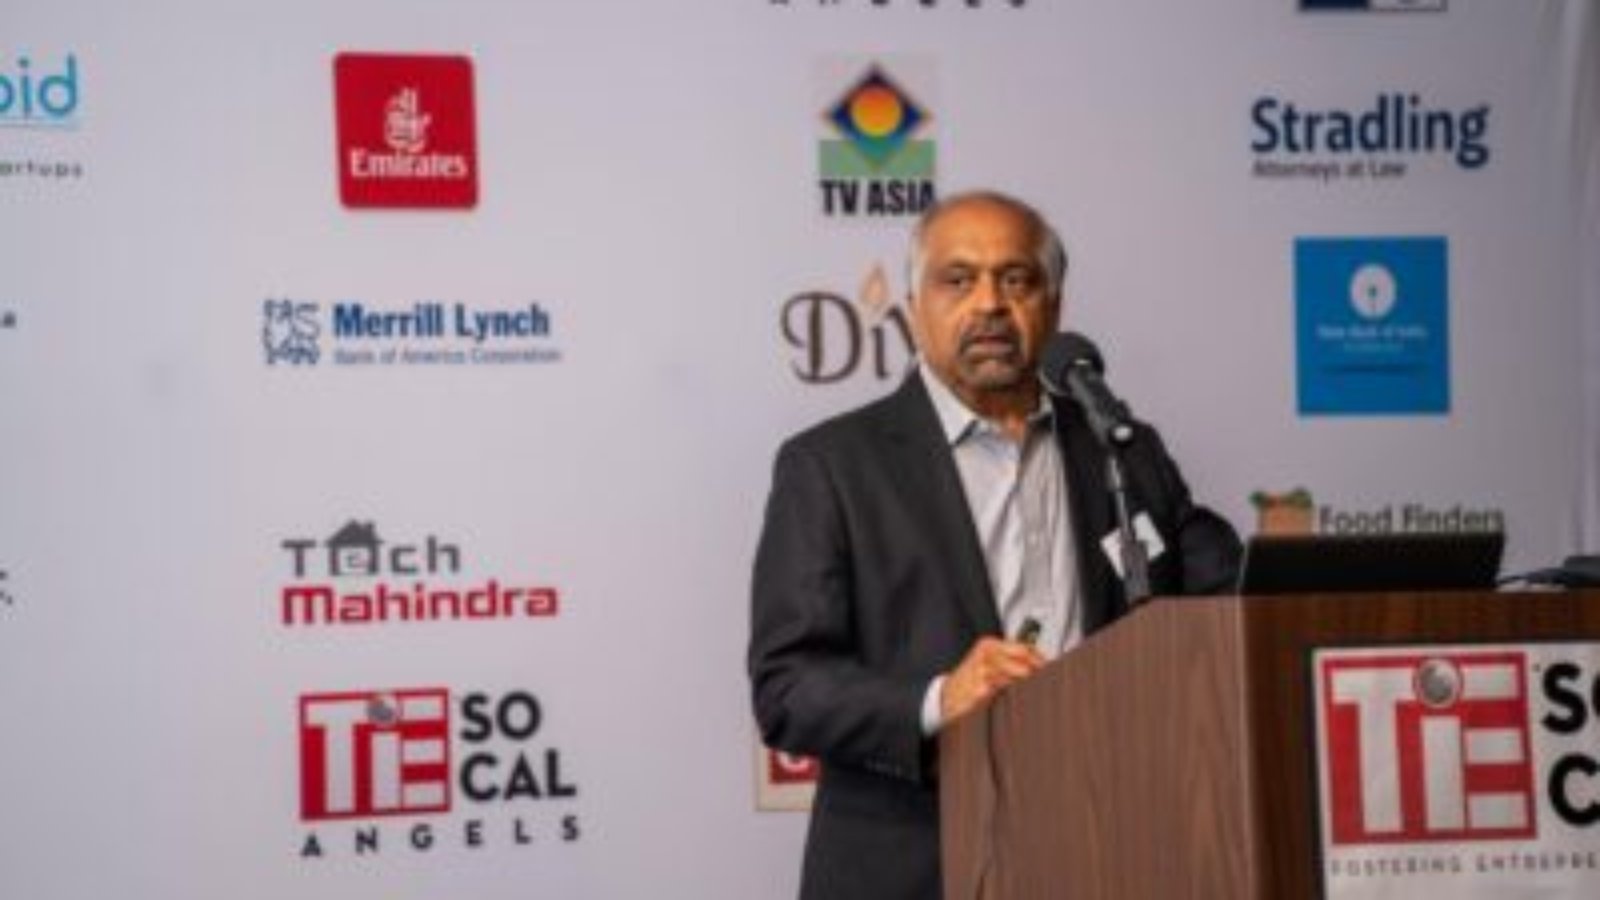 Shankar Ram from TiE SoCal elected to TiE Global Board of Trustees